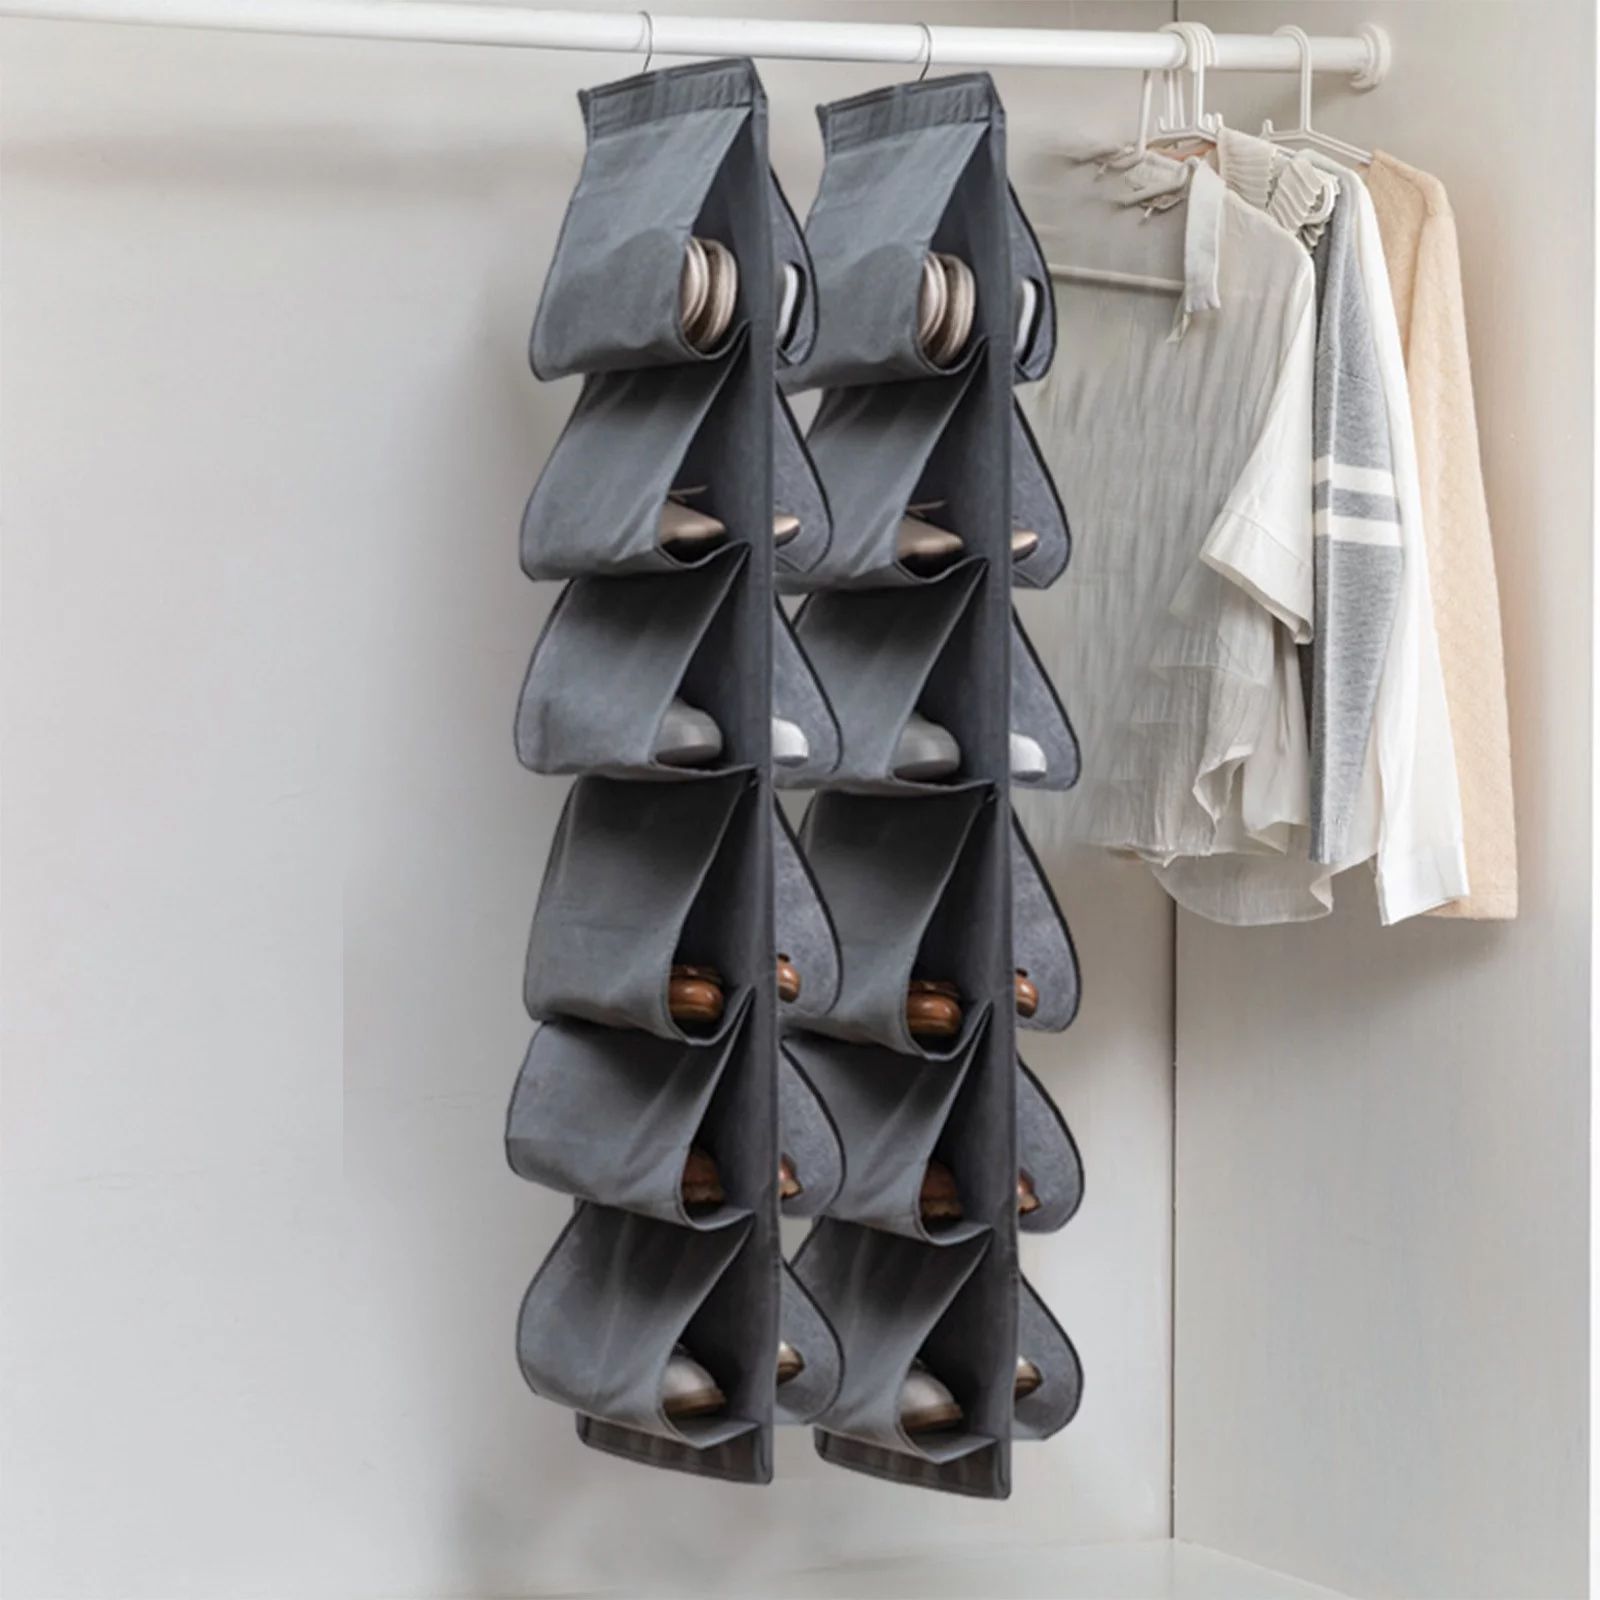 Hanging Shoe Organizer,Shoe Storage Bag Non-Woven Hanging Closet Organizers,12 Compartment Dustproof Storage Convenient Shoe Rack(Grey)